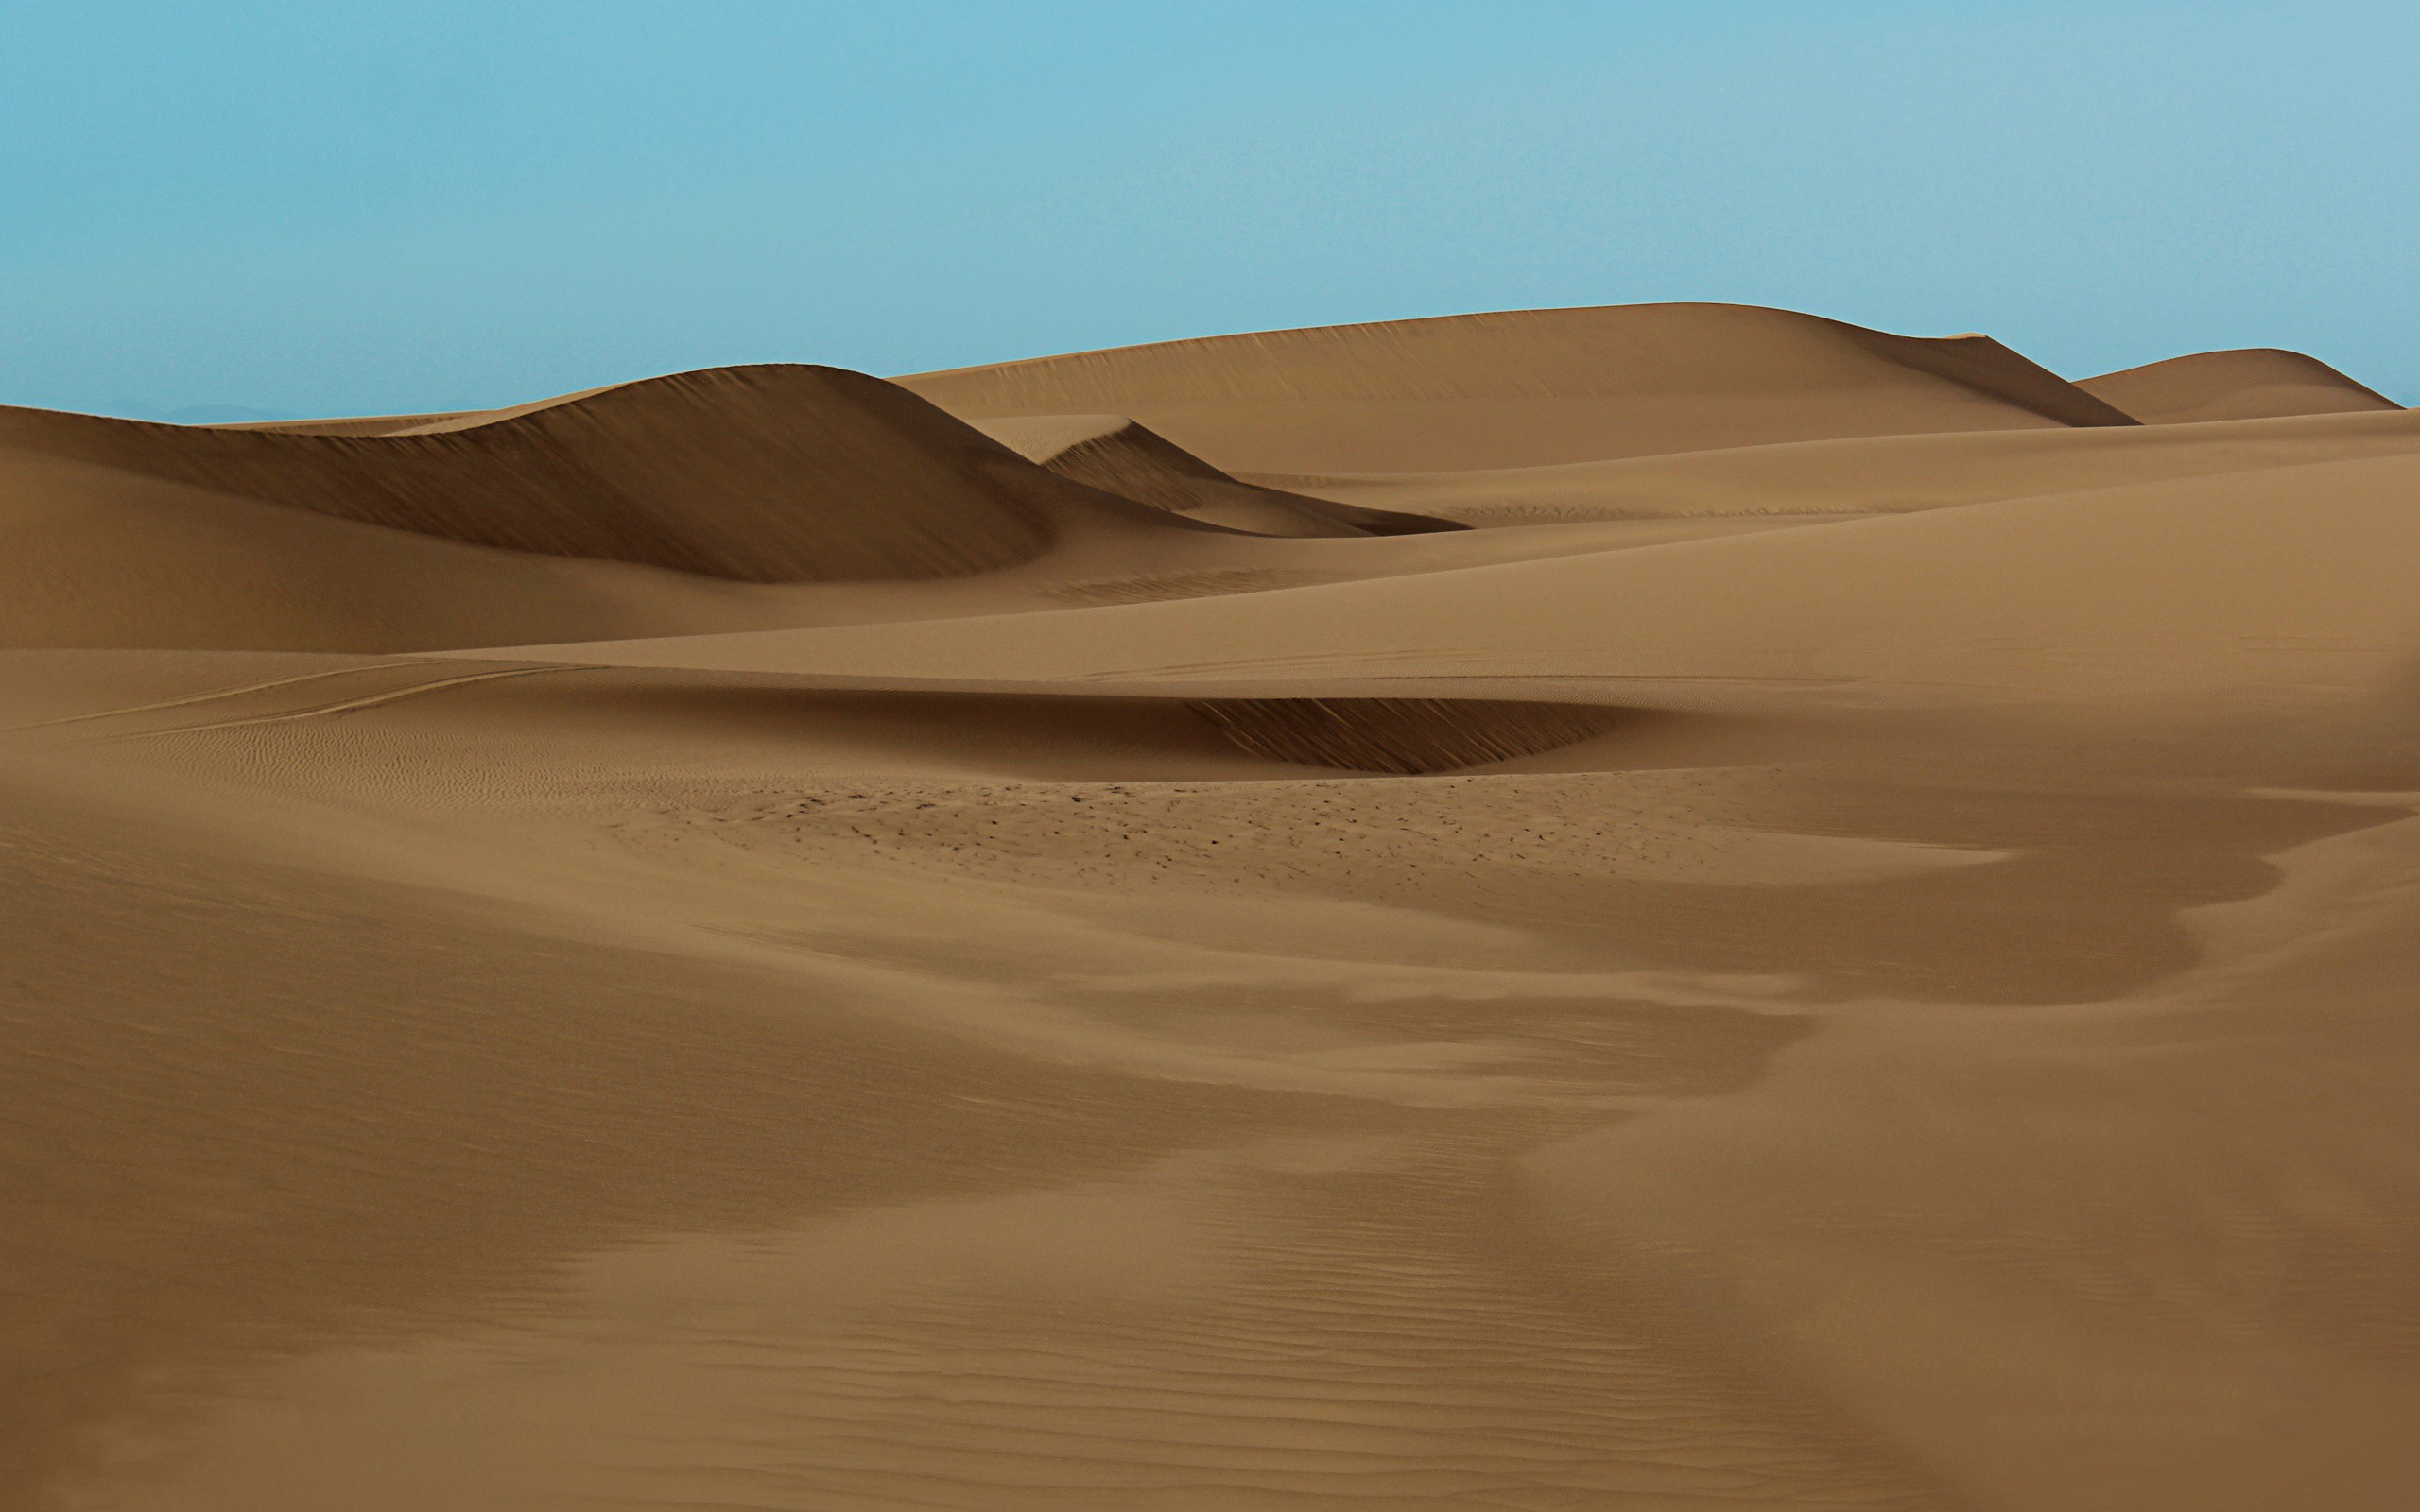 General 2560x1600 landscape nature desert dunes sand